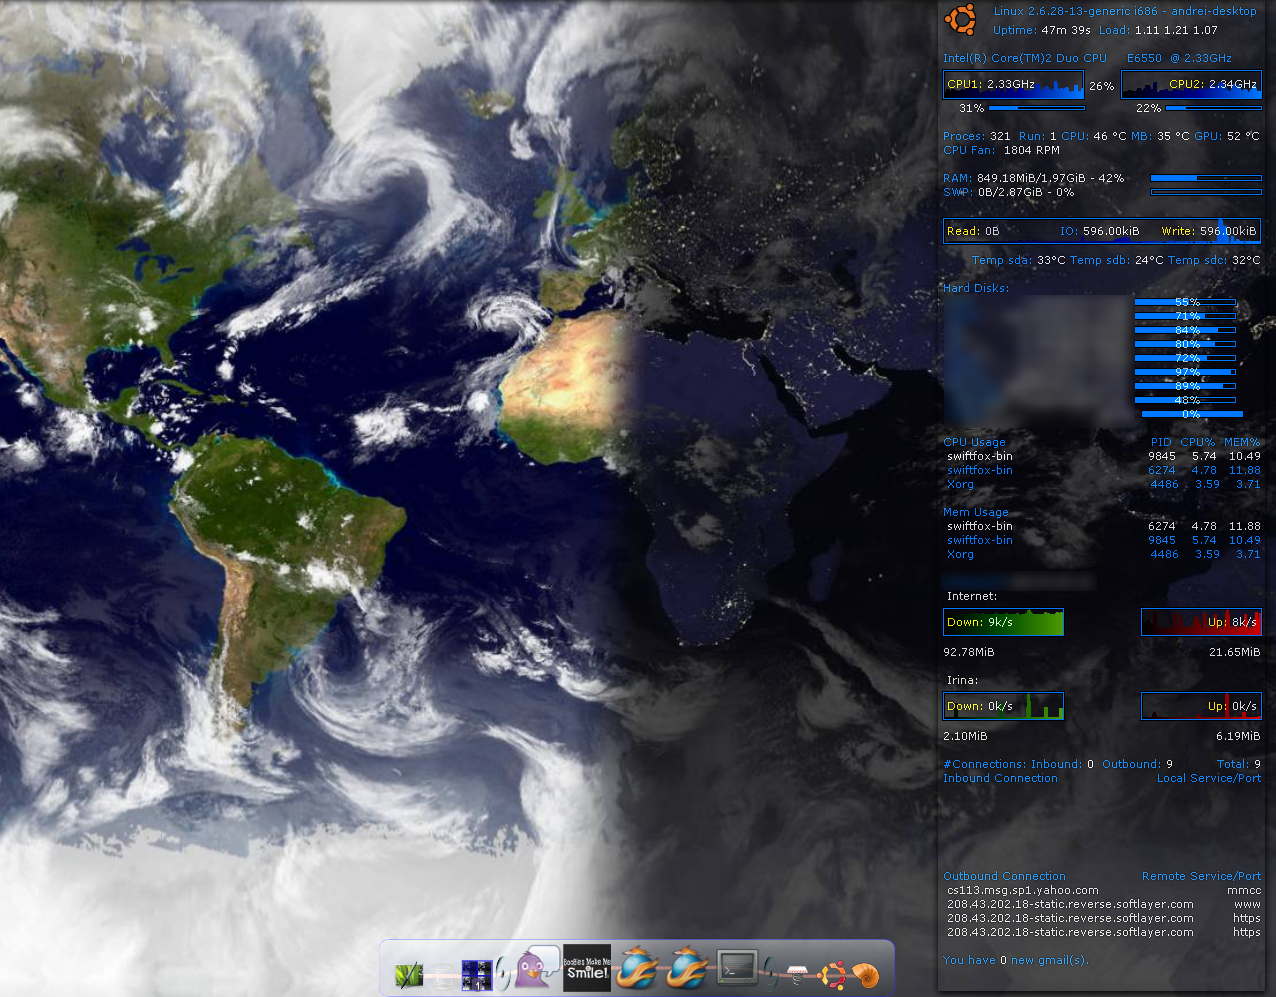 Real Time Earth Wallpaper For Linux Web Upd8 Ubuntu Linux blog